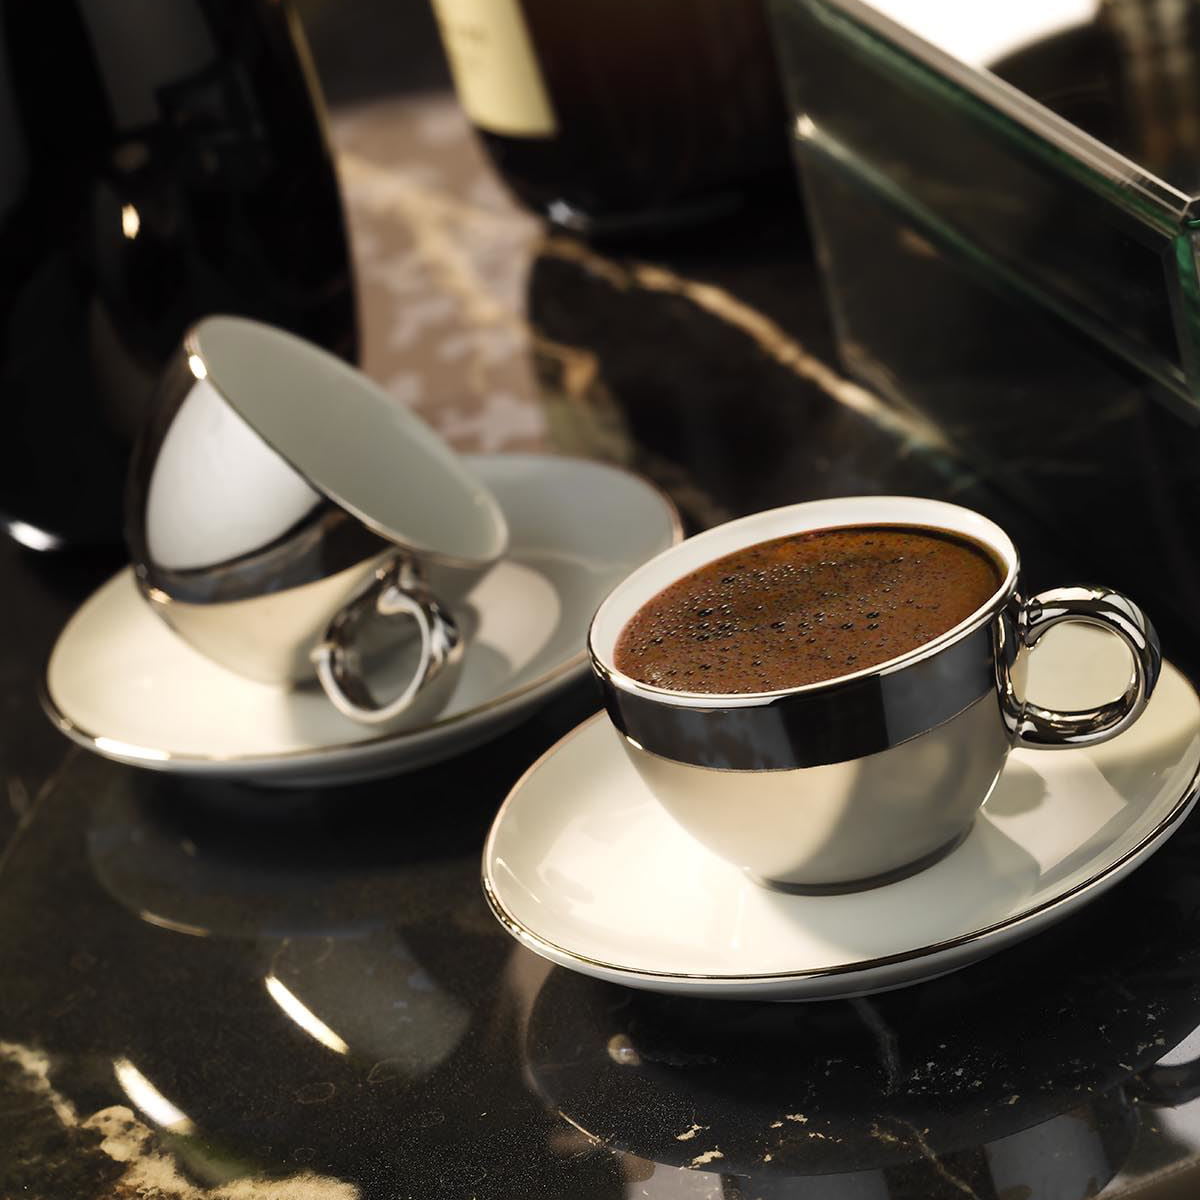 Topkapi Coffee Cup Set